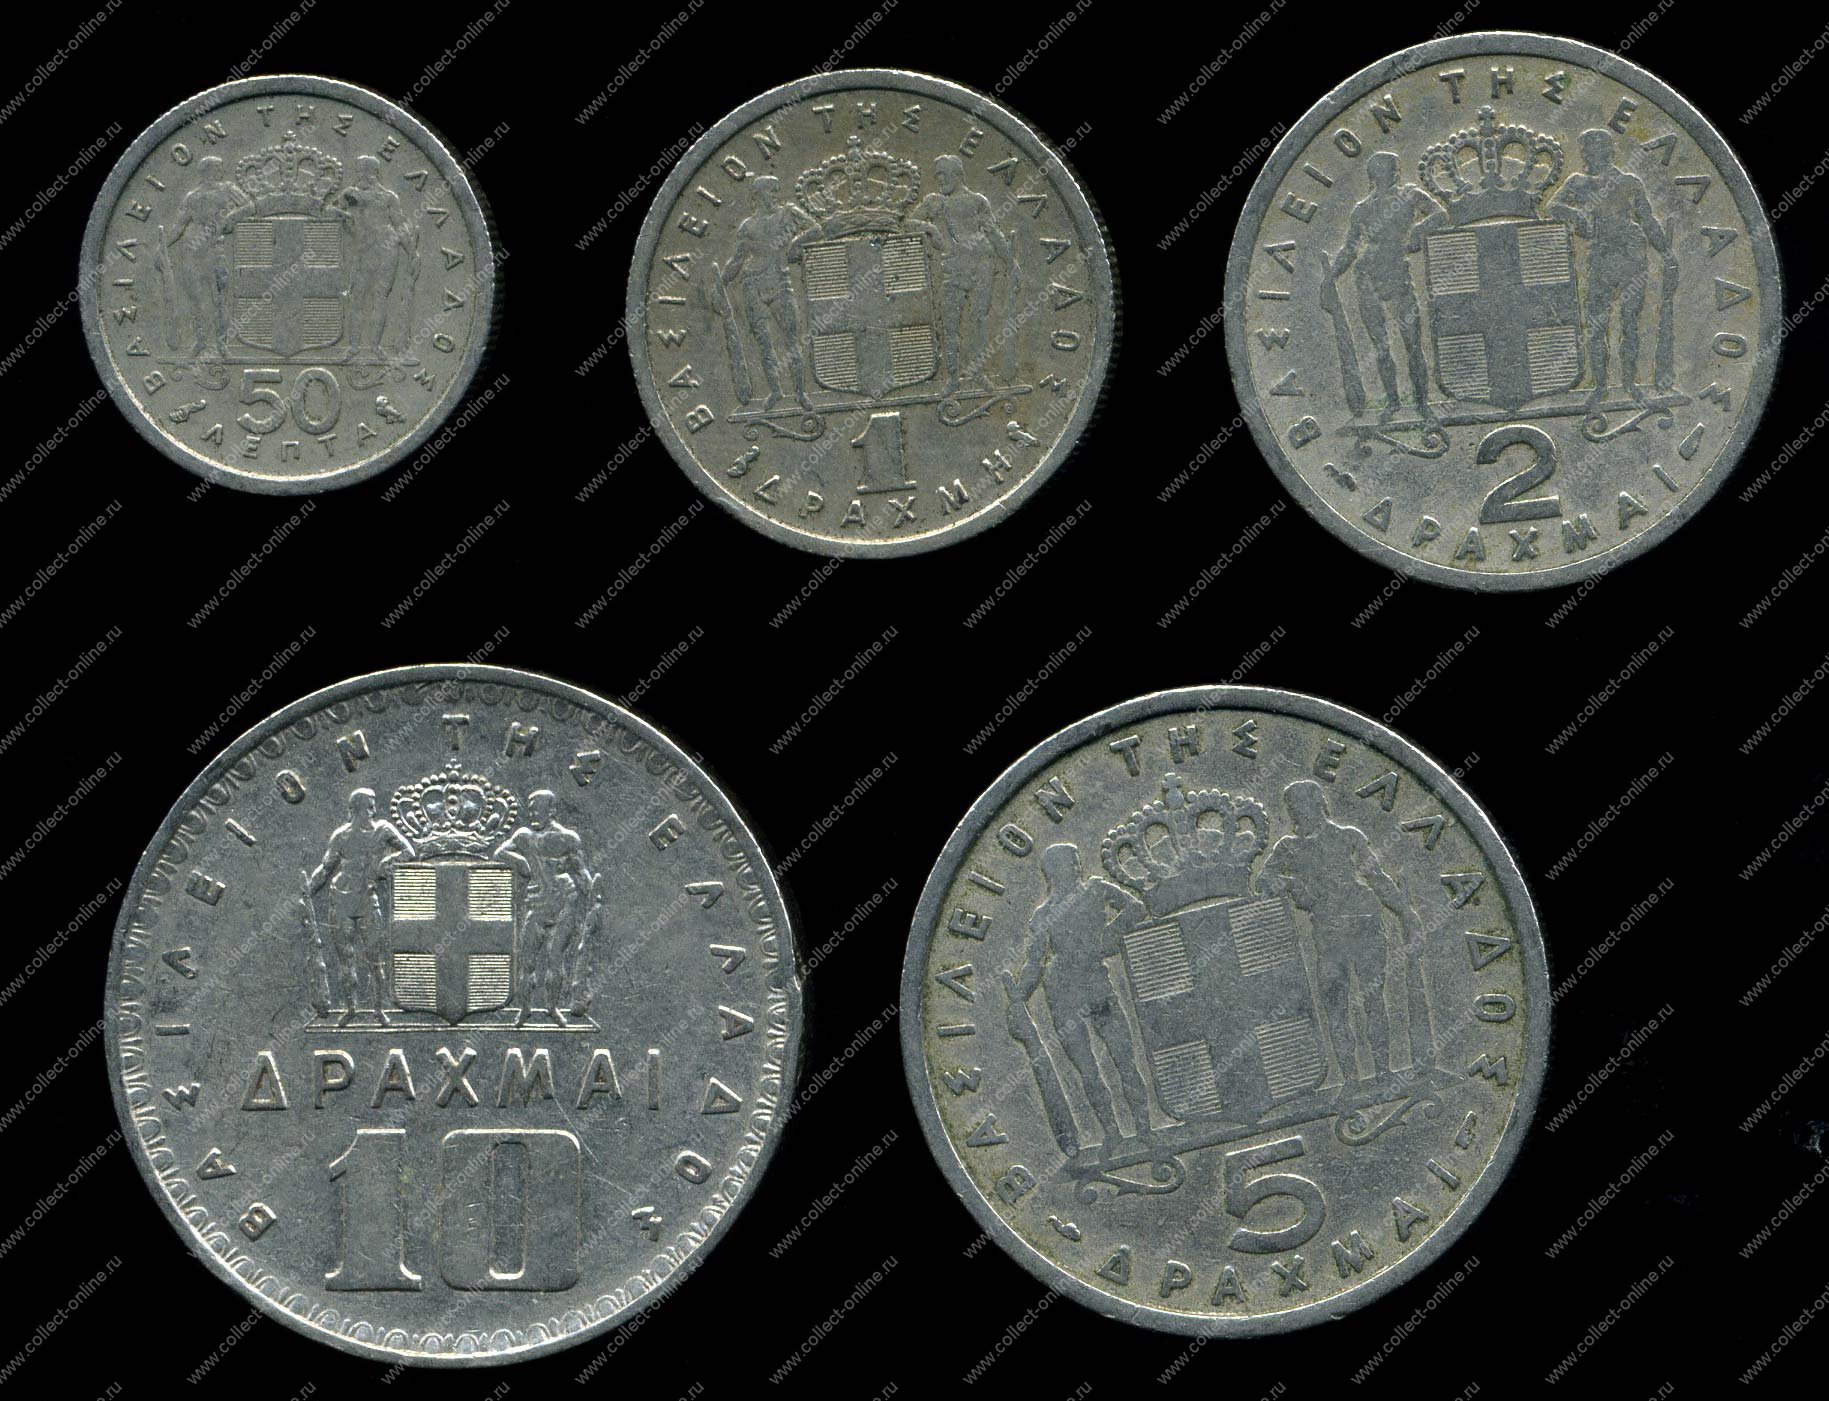 Коллекционер 8 букв. 10 Драхм армии. Монеты VF-XF. Как они выглядят. Цена пуги \ККА\-1859-62гг.